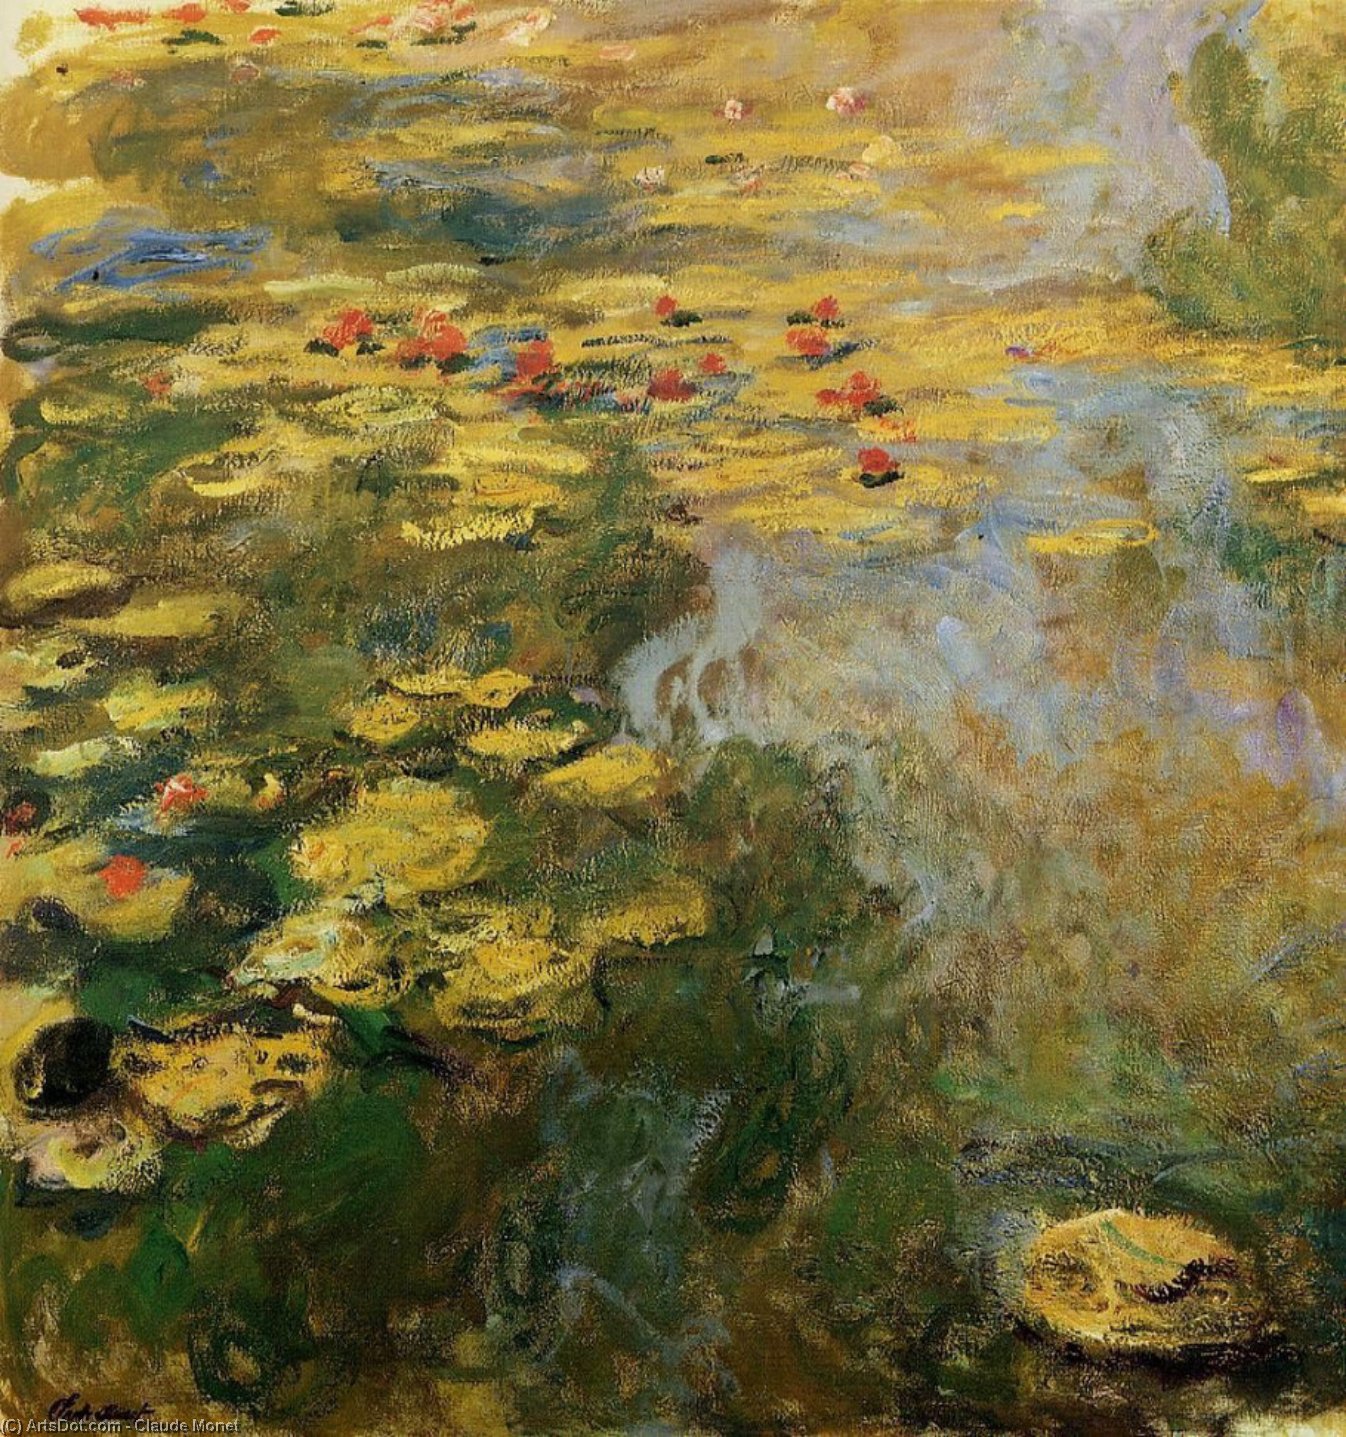 Acheter Reproductions D'art De Musée L`étang étanche (côté gauche), 1917 de Claude Monet (1840-1926, France) | ArtsDot.com